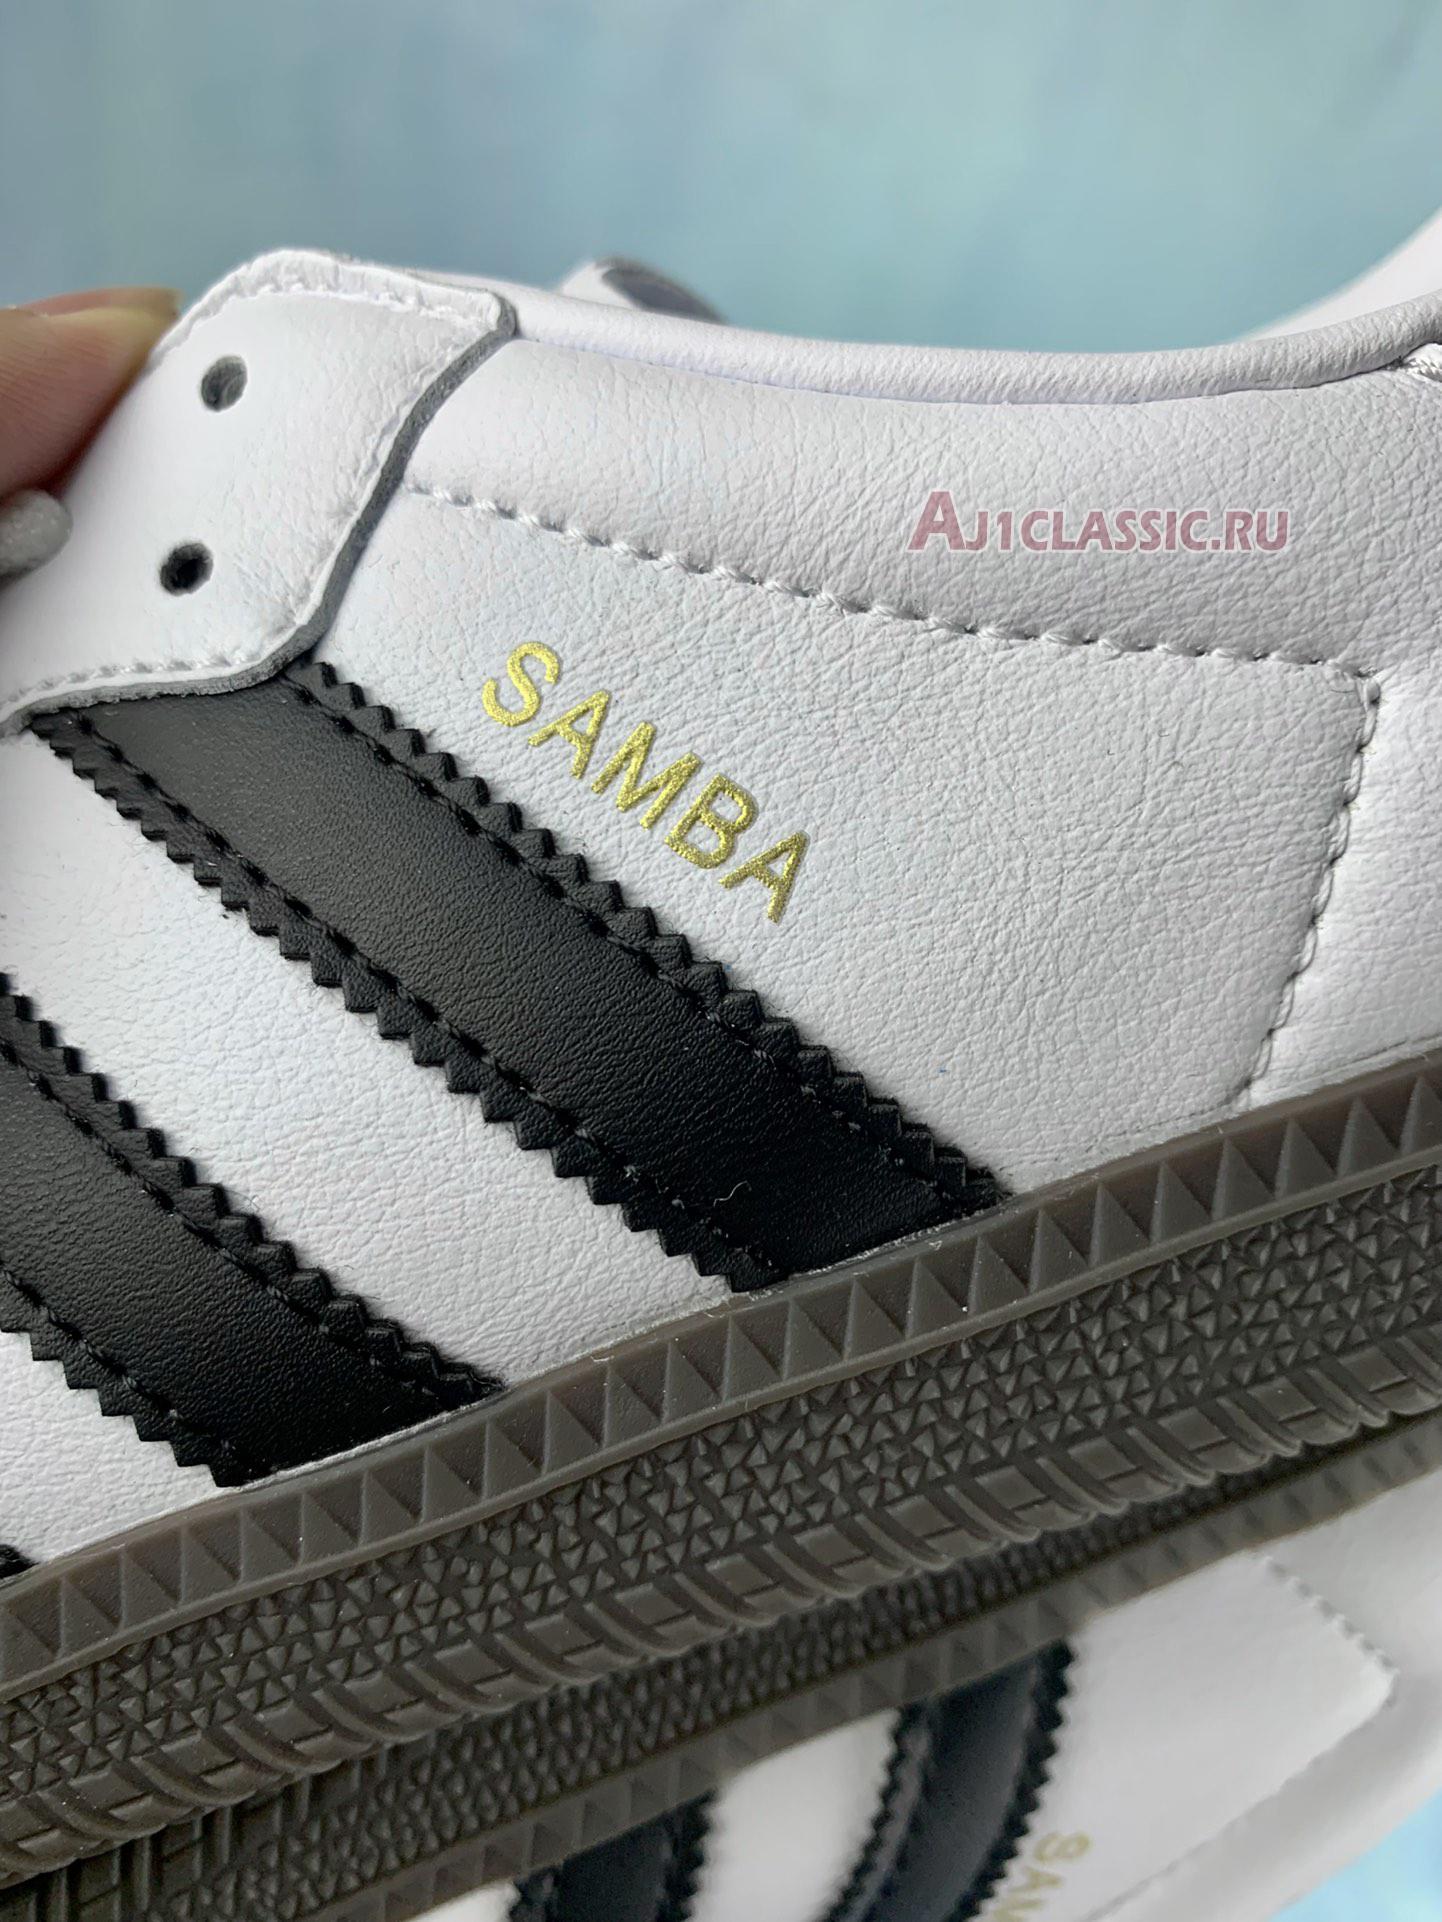 Adidas Samba OG "White Black Gum" B75806